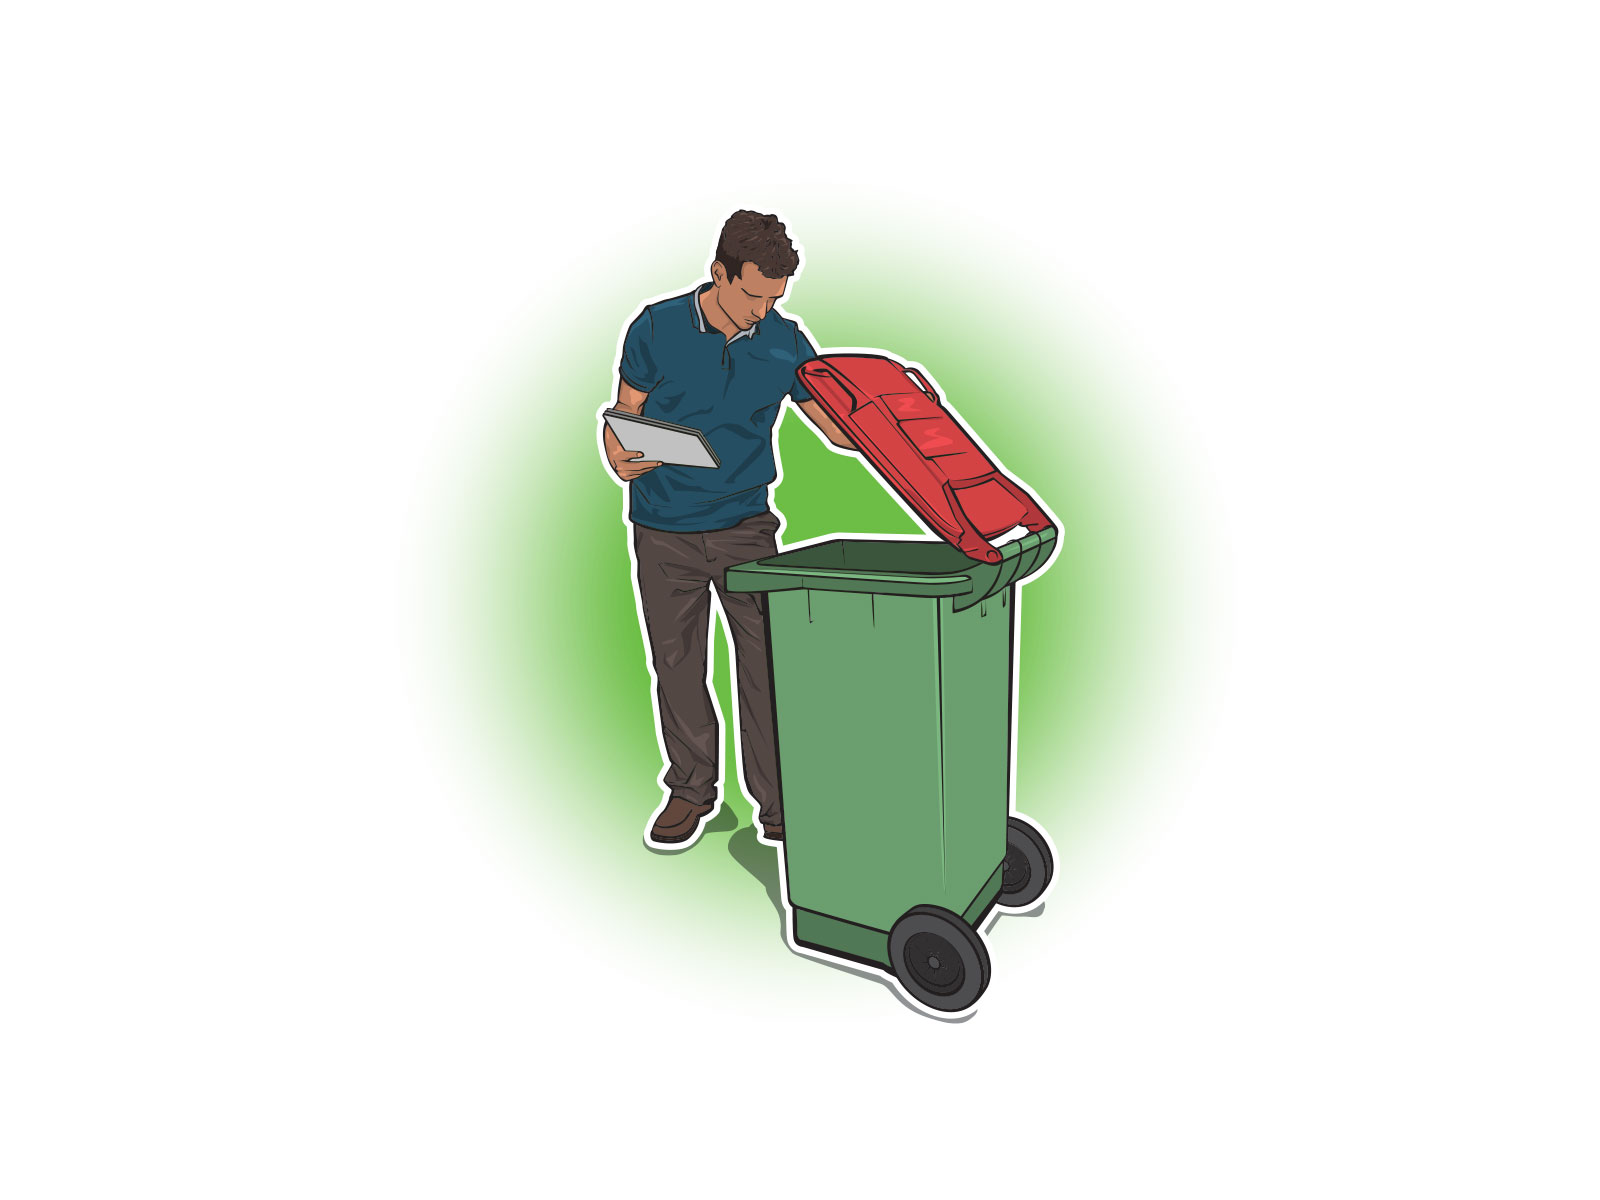 Stylised vector illustration of man inspecting red wheelie bin